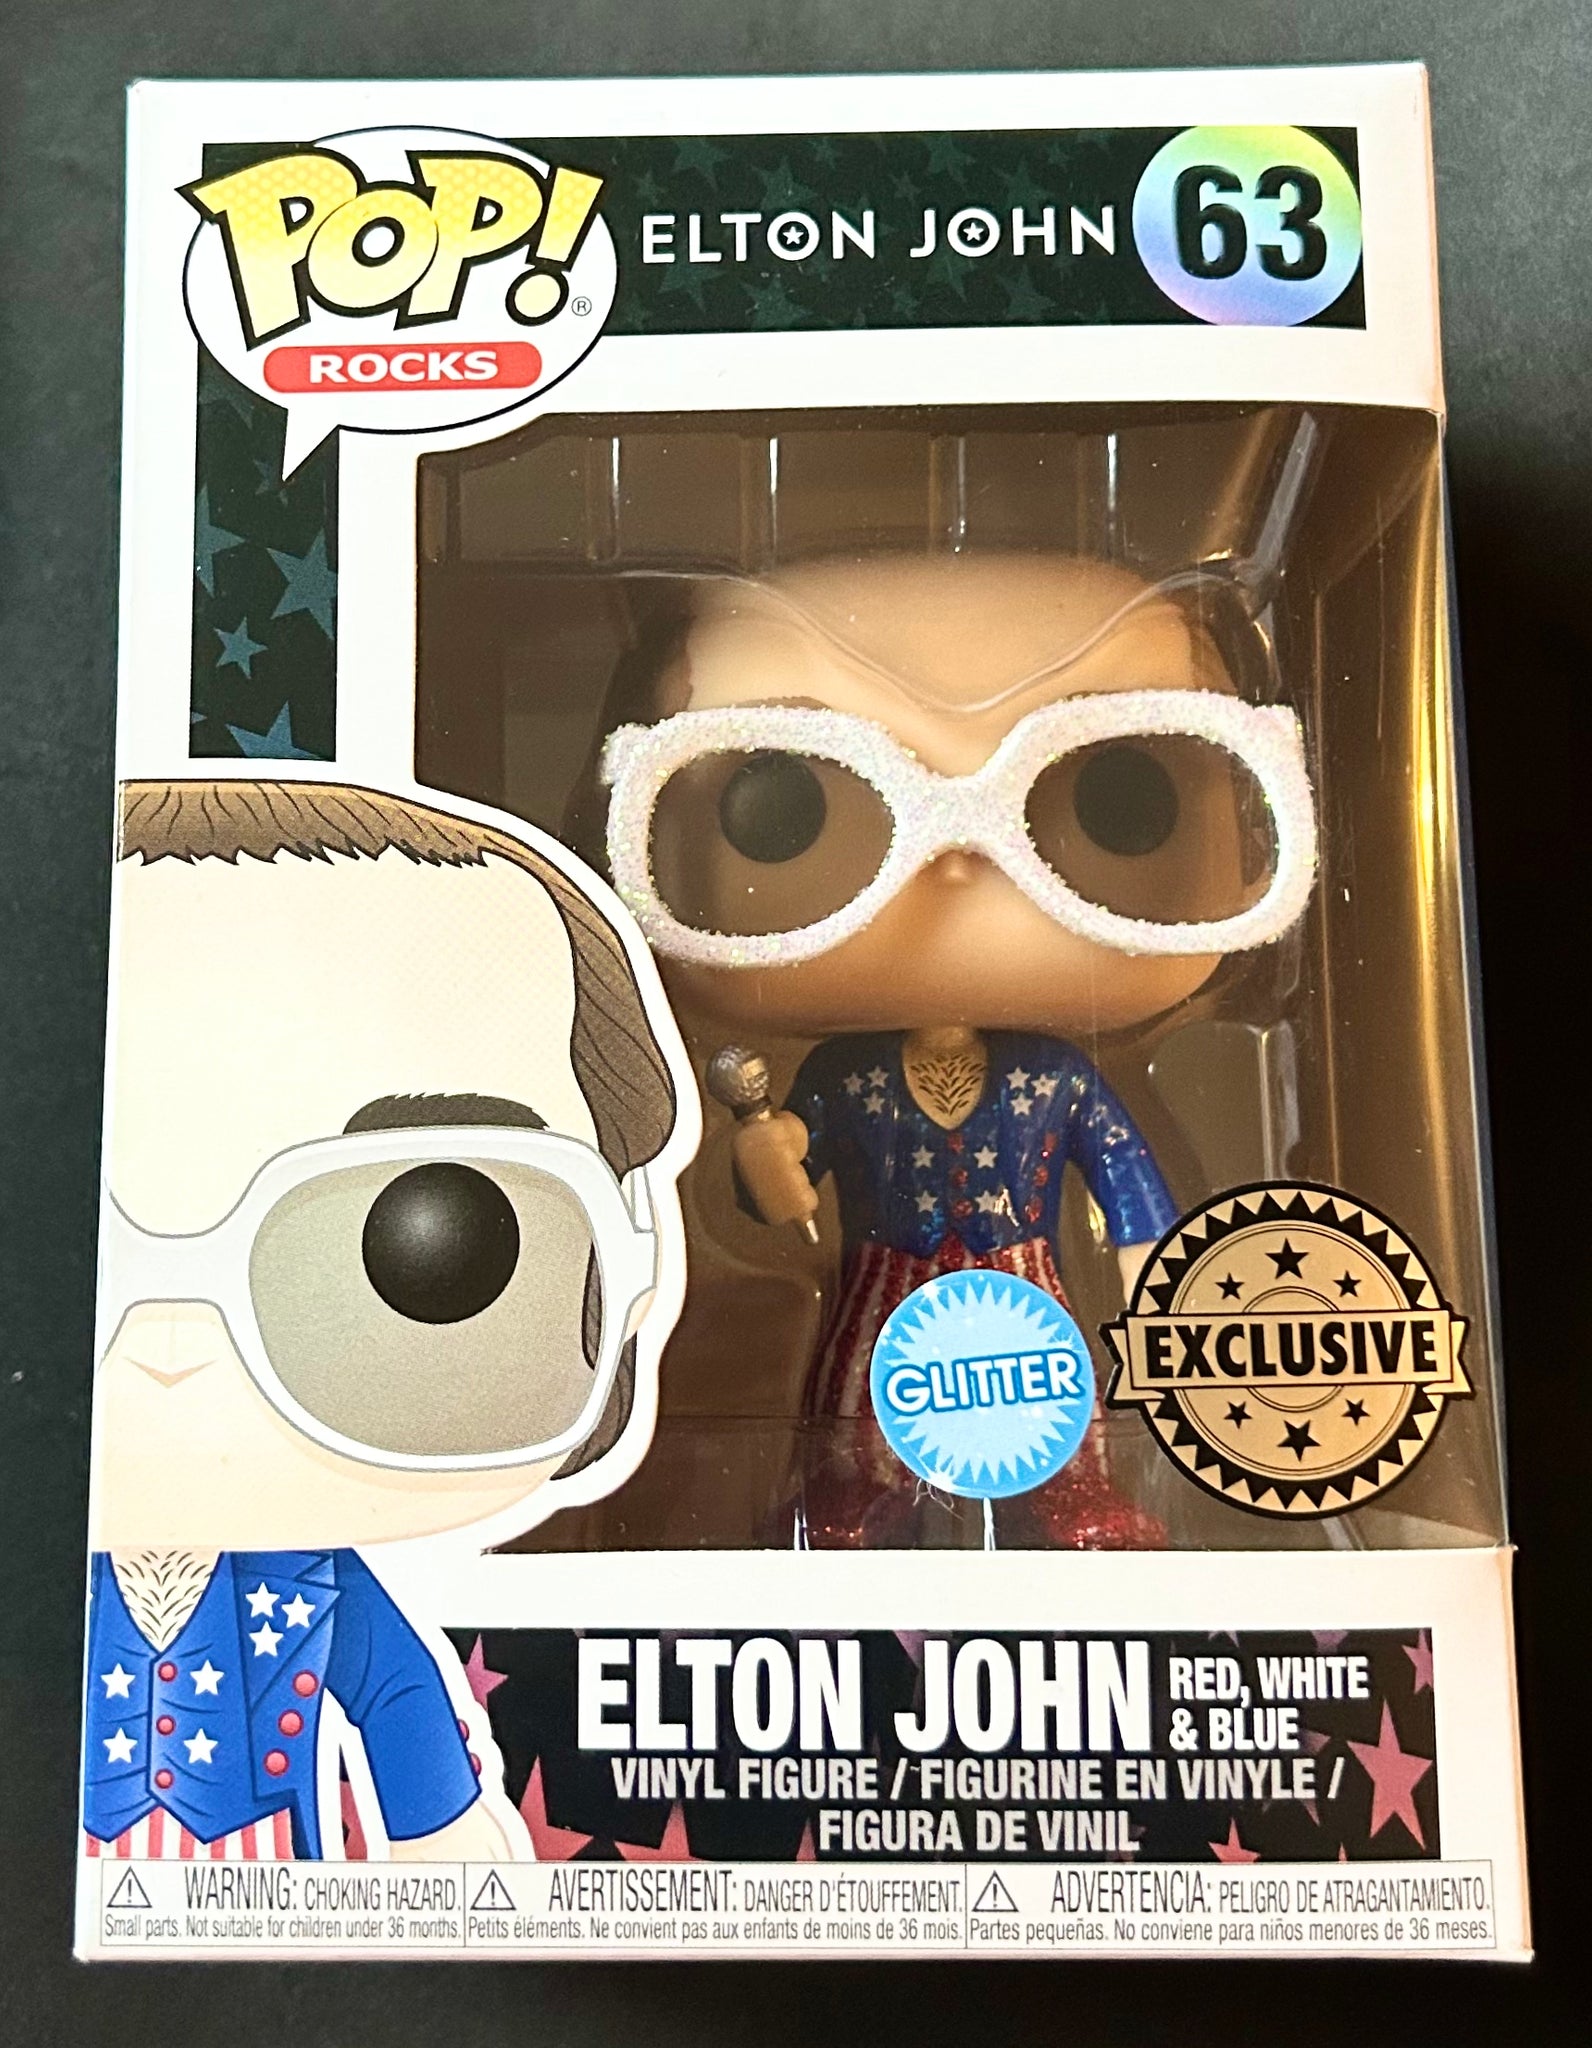 Elton John Red, White and Blue Glitter Exclusive 63 Funko POP